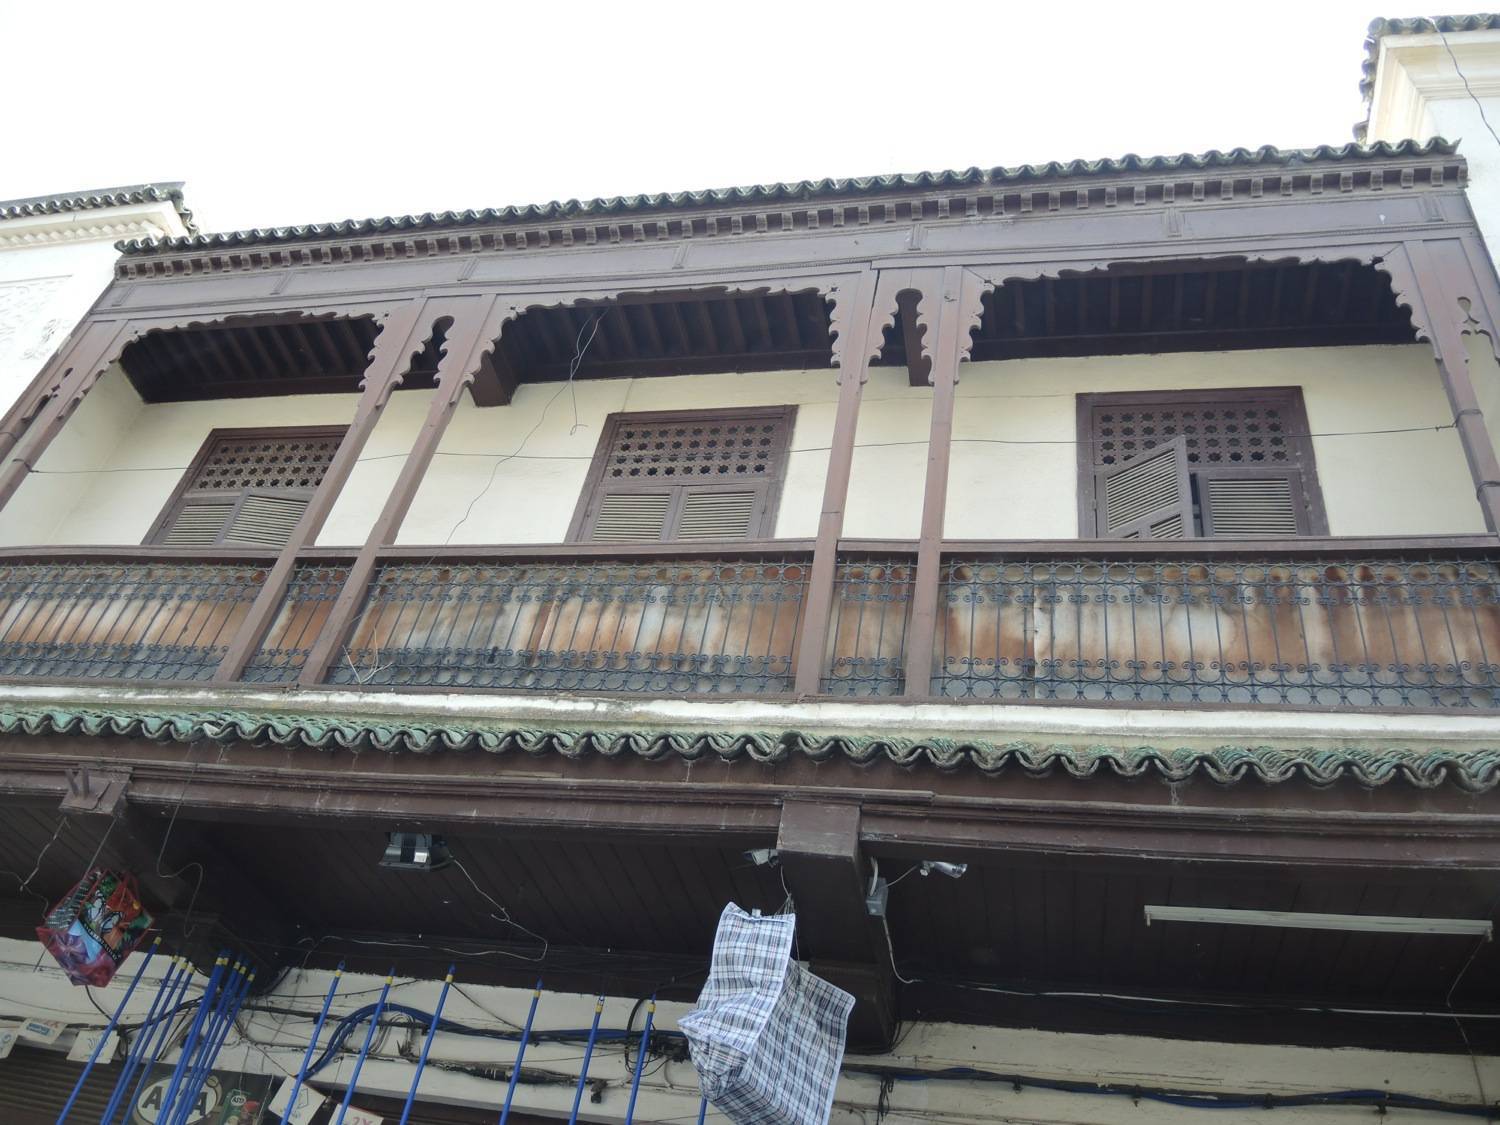 Jewish Residences of Fez - Second floor balconies on Rue Bou Ksissat